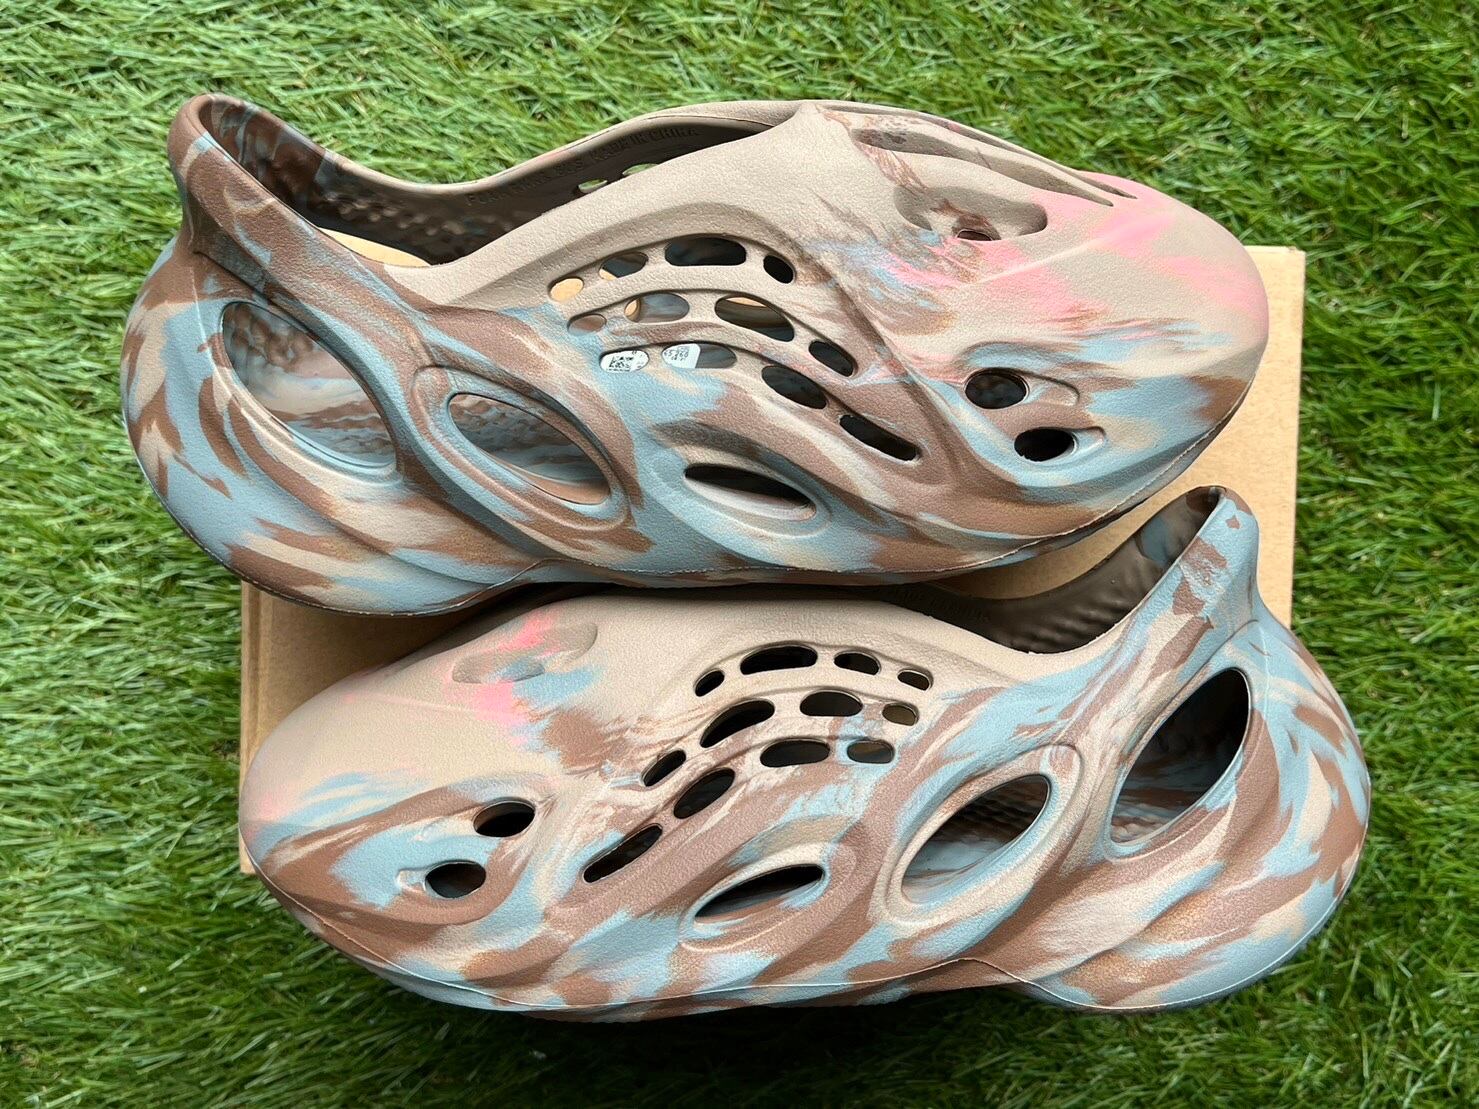 adidas YEEZY Foam Runner "Mx Sand Grey"